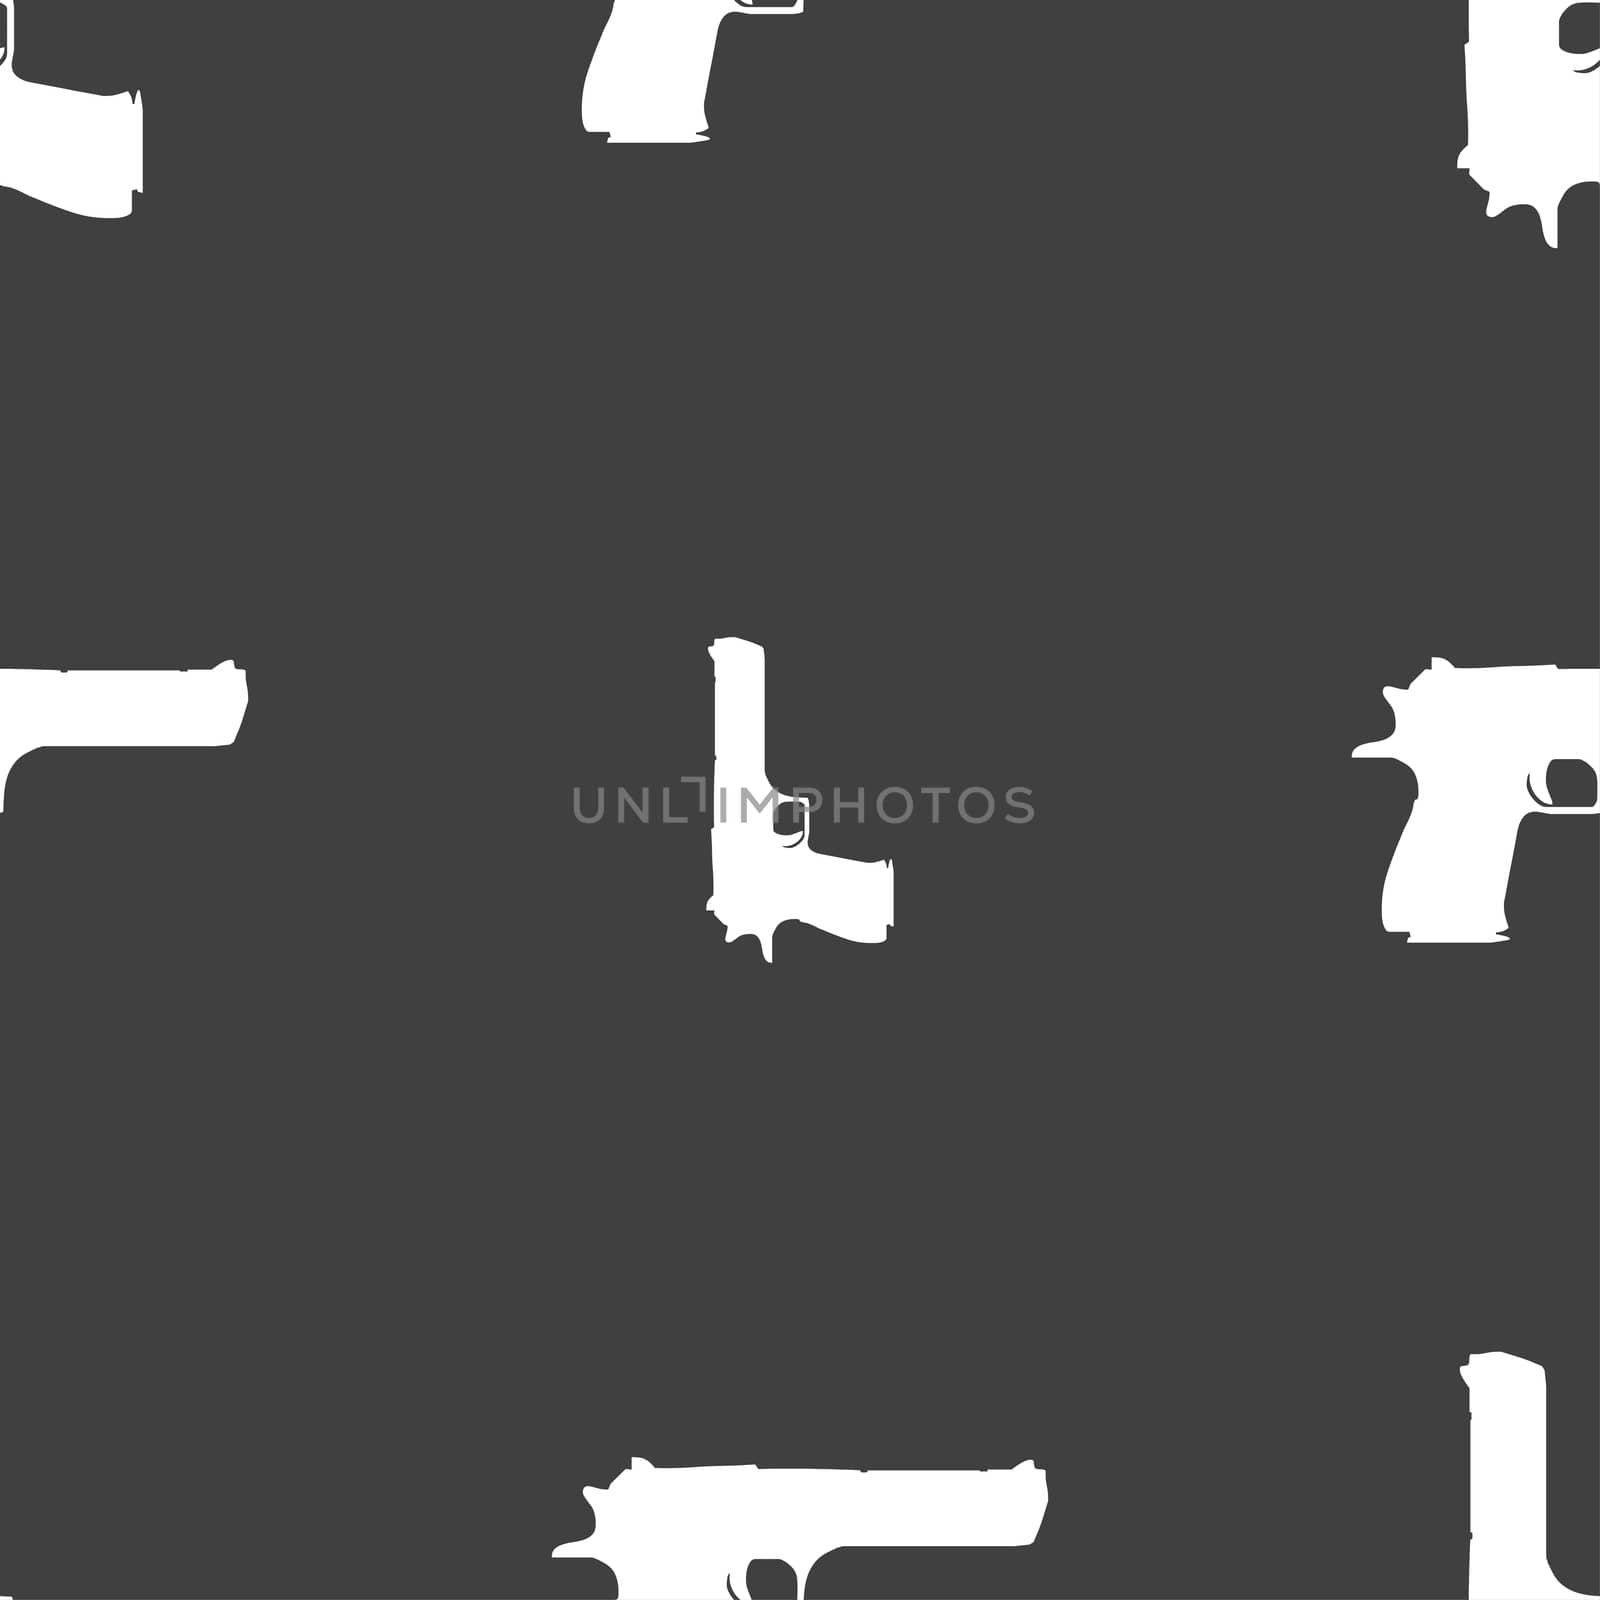 gun icon sign. Seamless pattern on a gray background. illustration